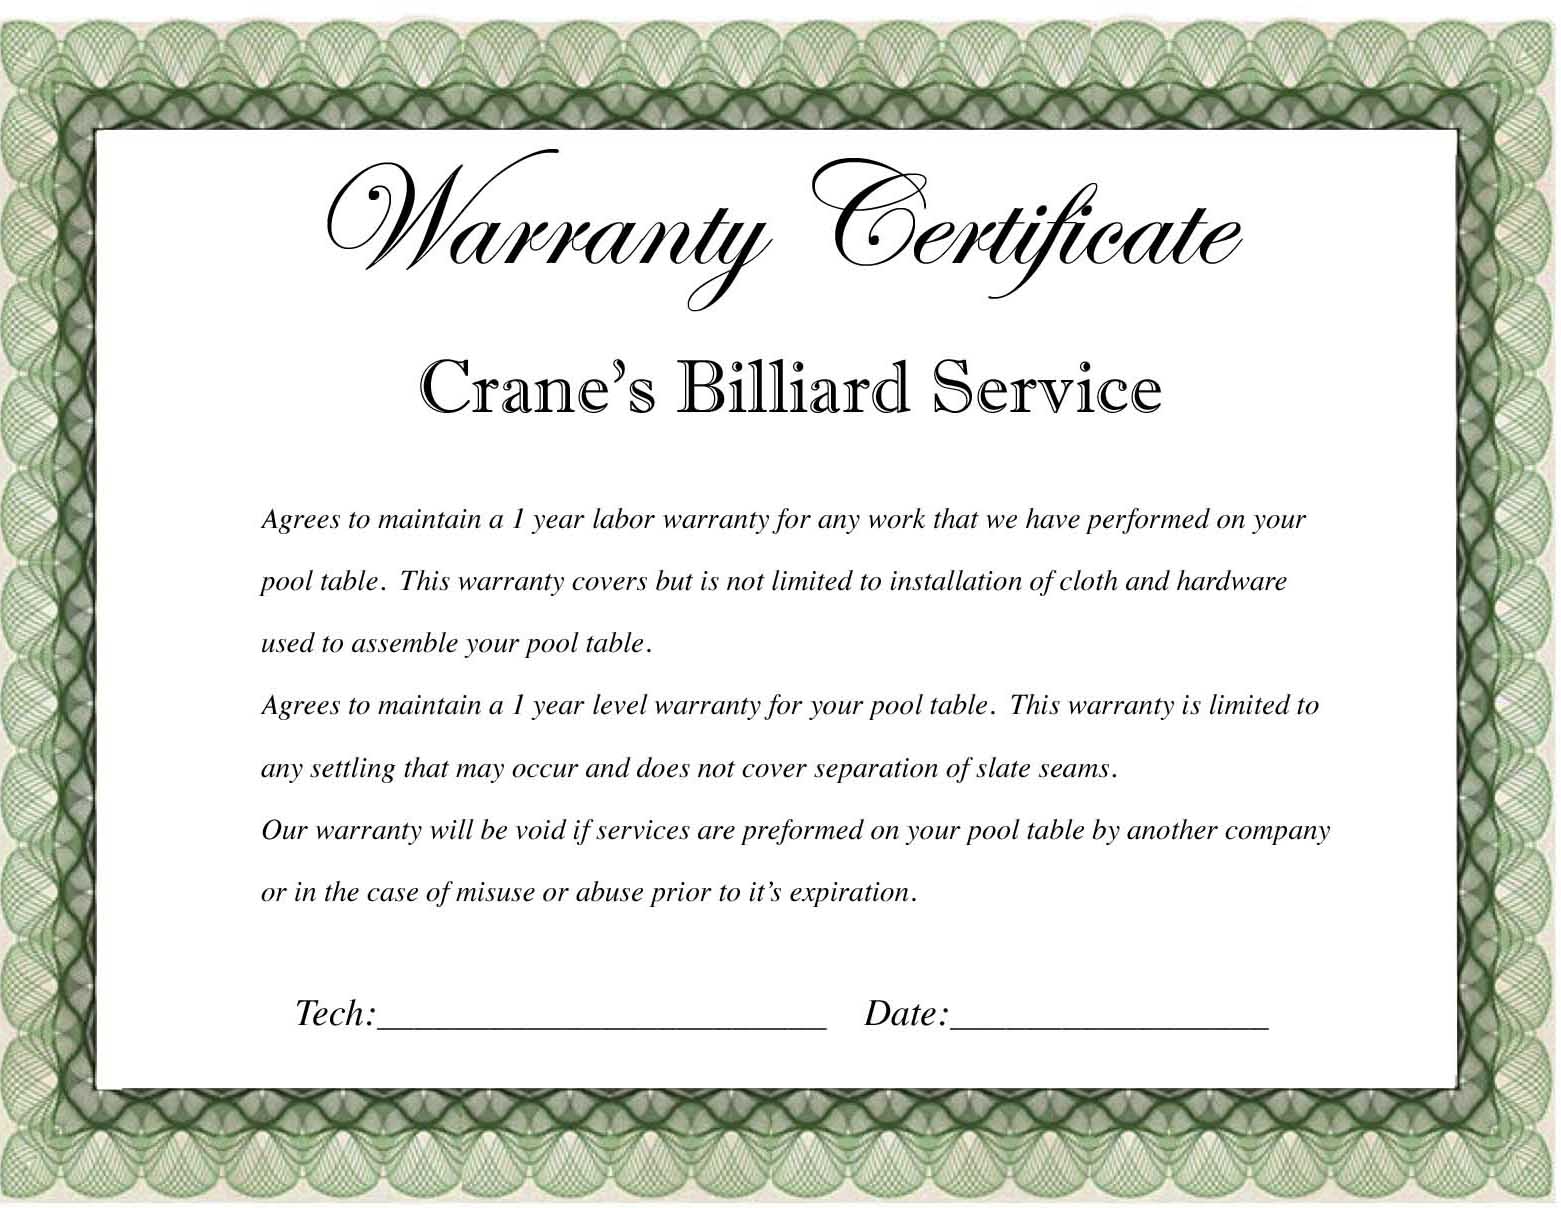 Printable Guarantee Certificate Templates | Certificate Templates Blank Certificate Templates For Word Free